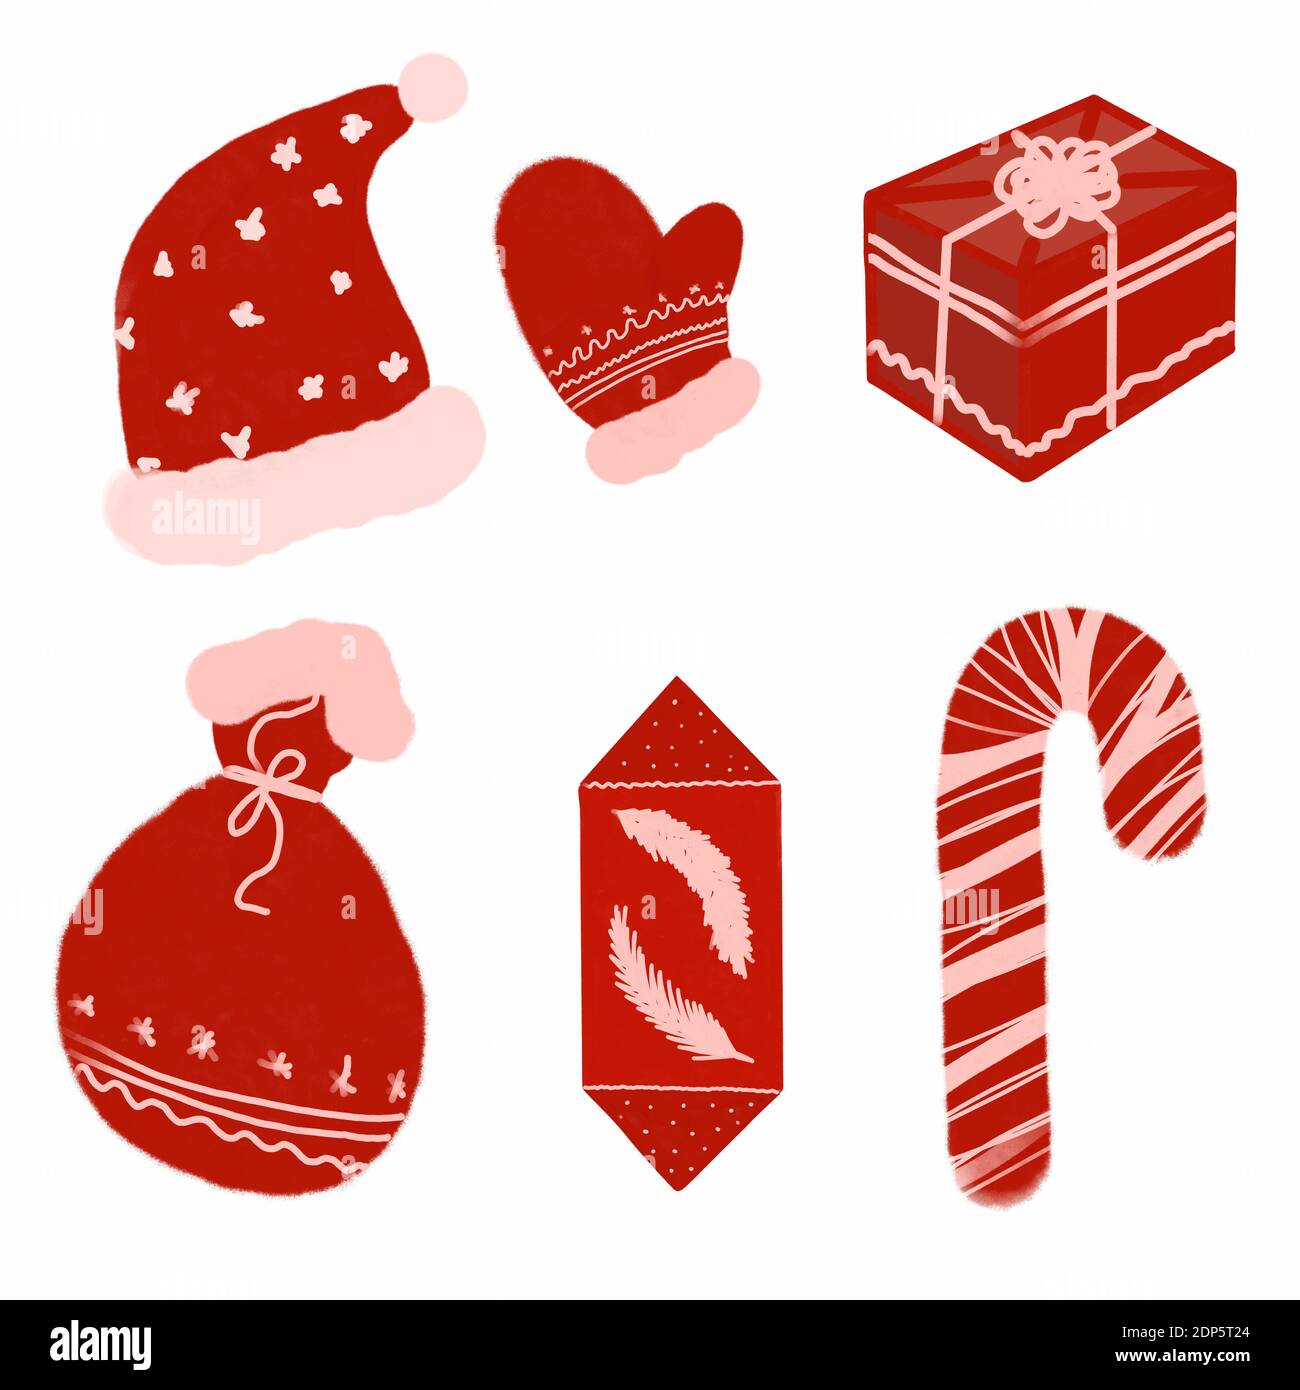 Weihnachts-Illustrationen-Set, rot. Hochwertige Illustration Stockfoto